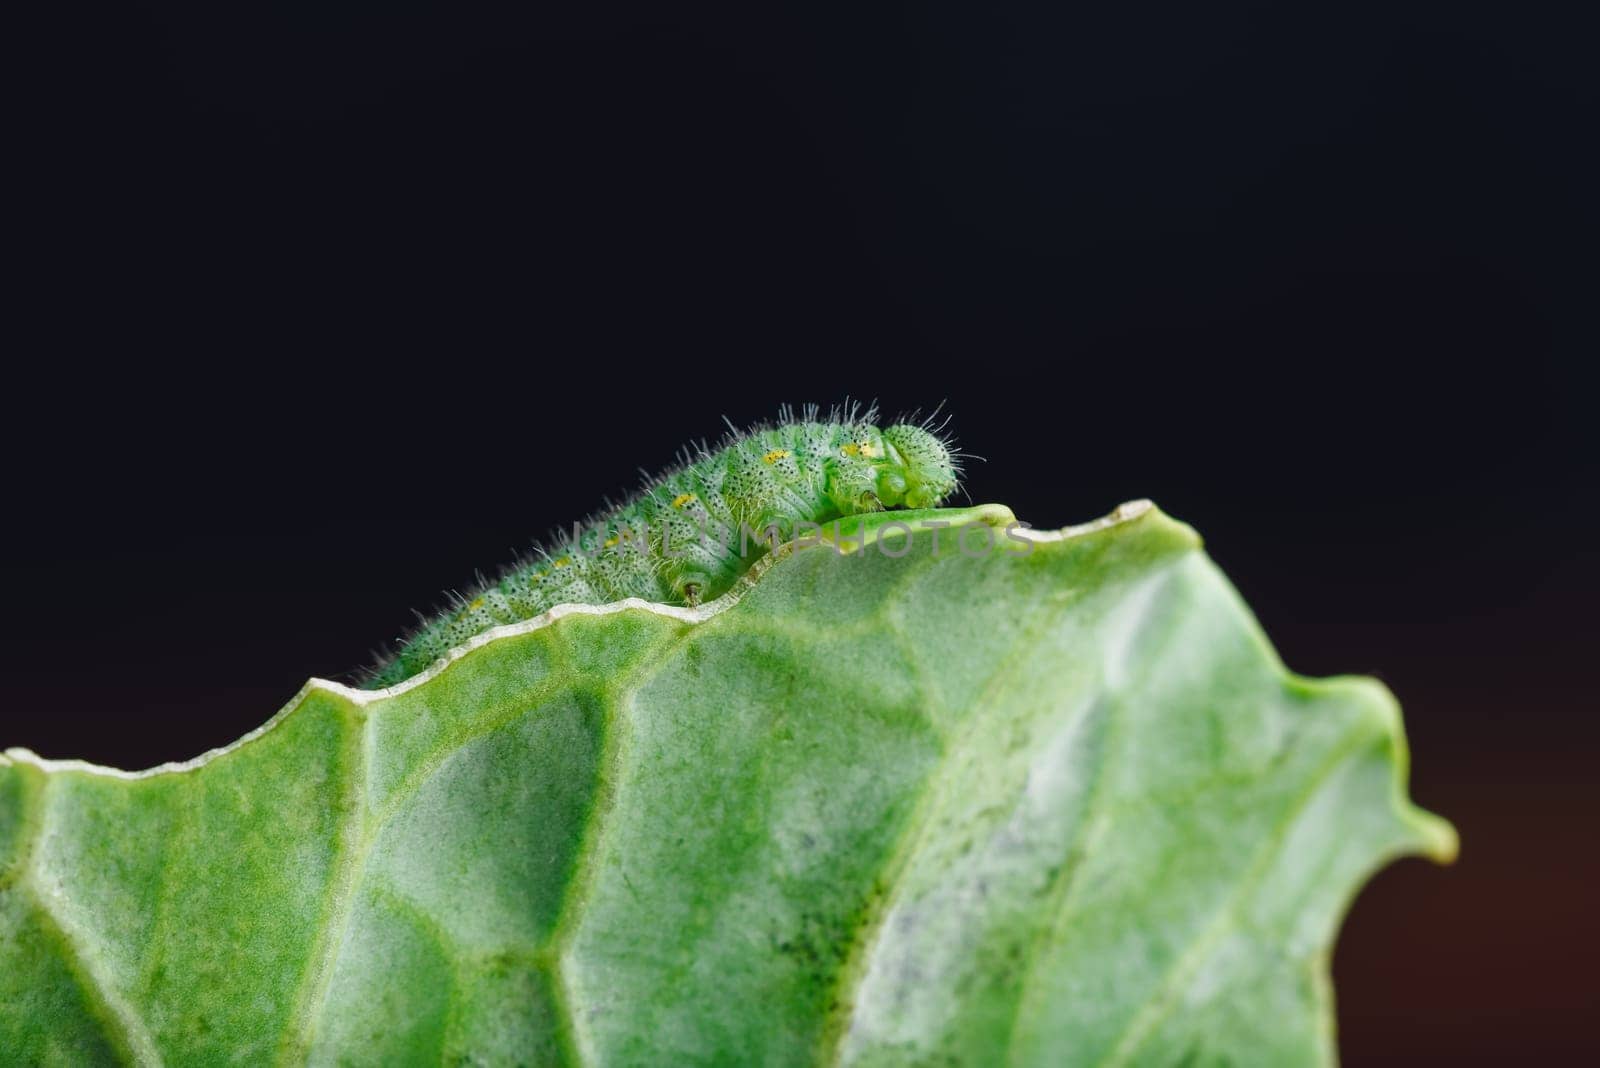 Green Caterpillar Crawling on a Cabbage Leaf by Seva_blsv